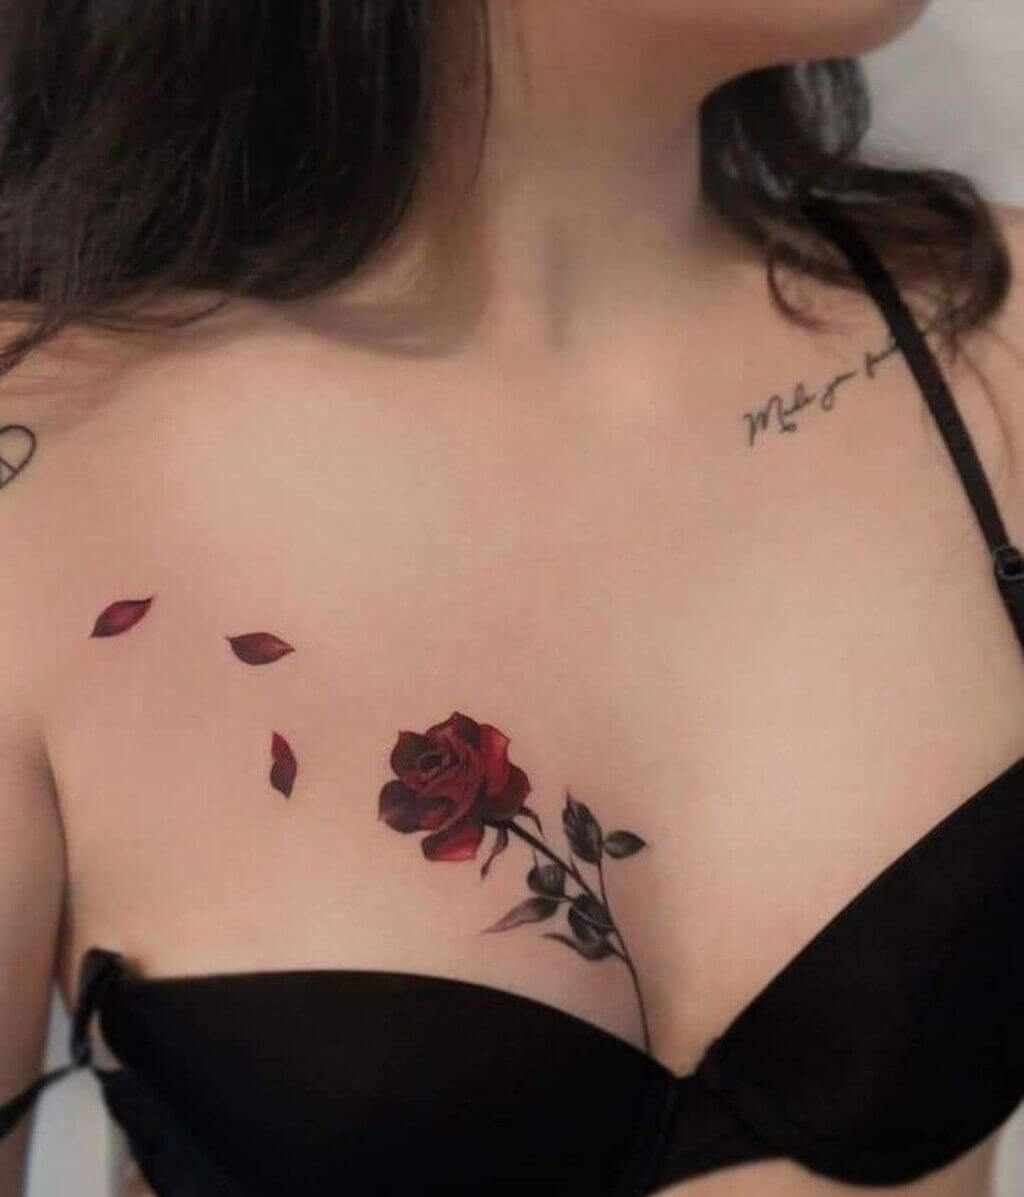 female breast tattoos designs